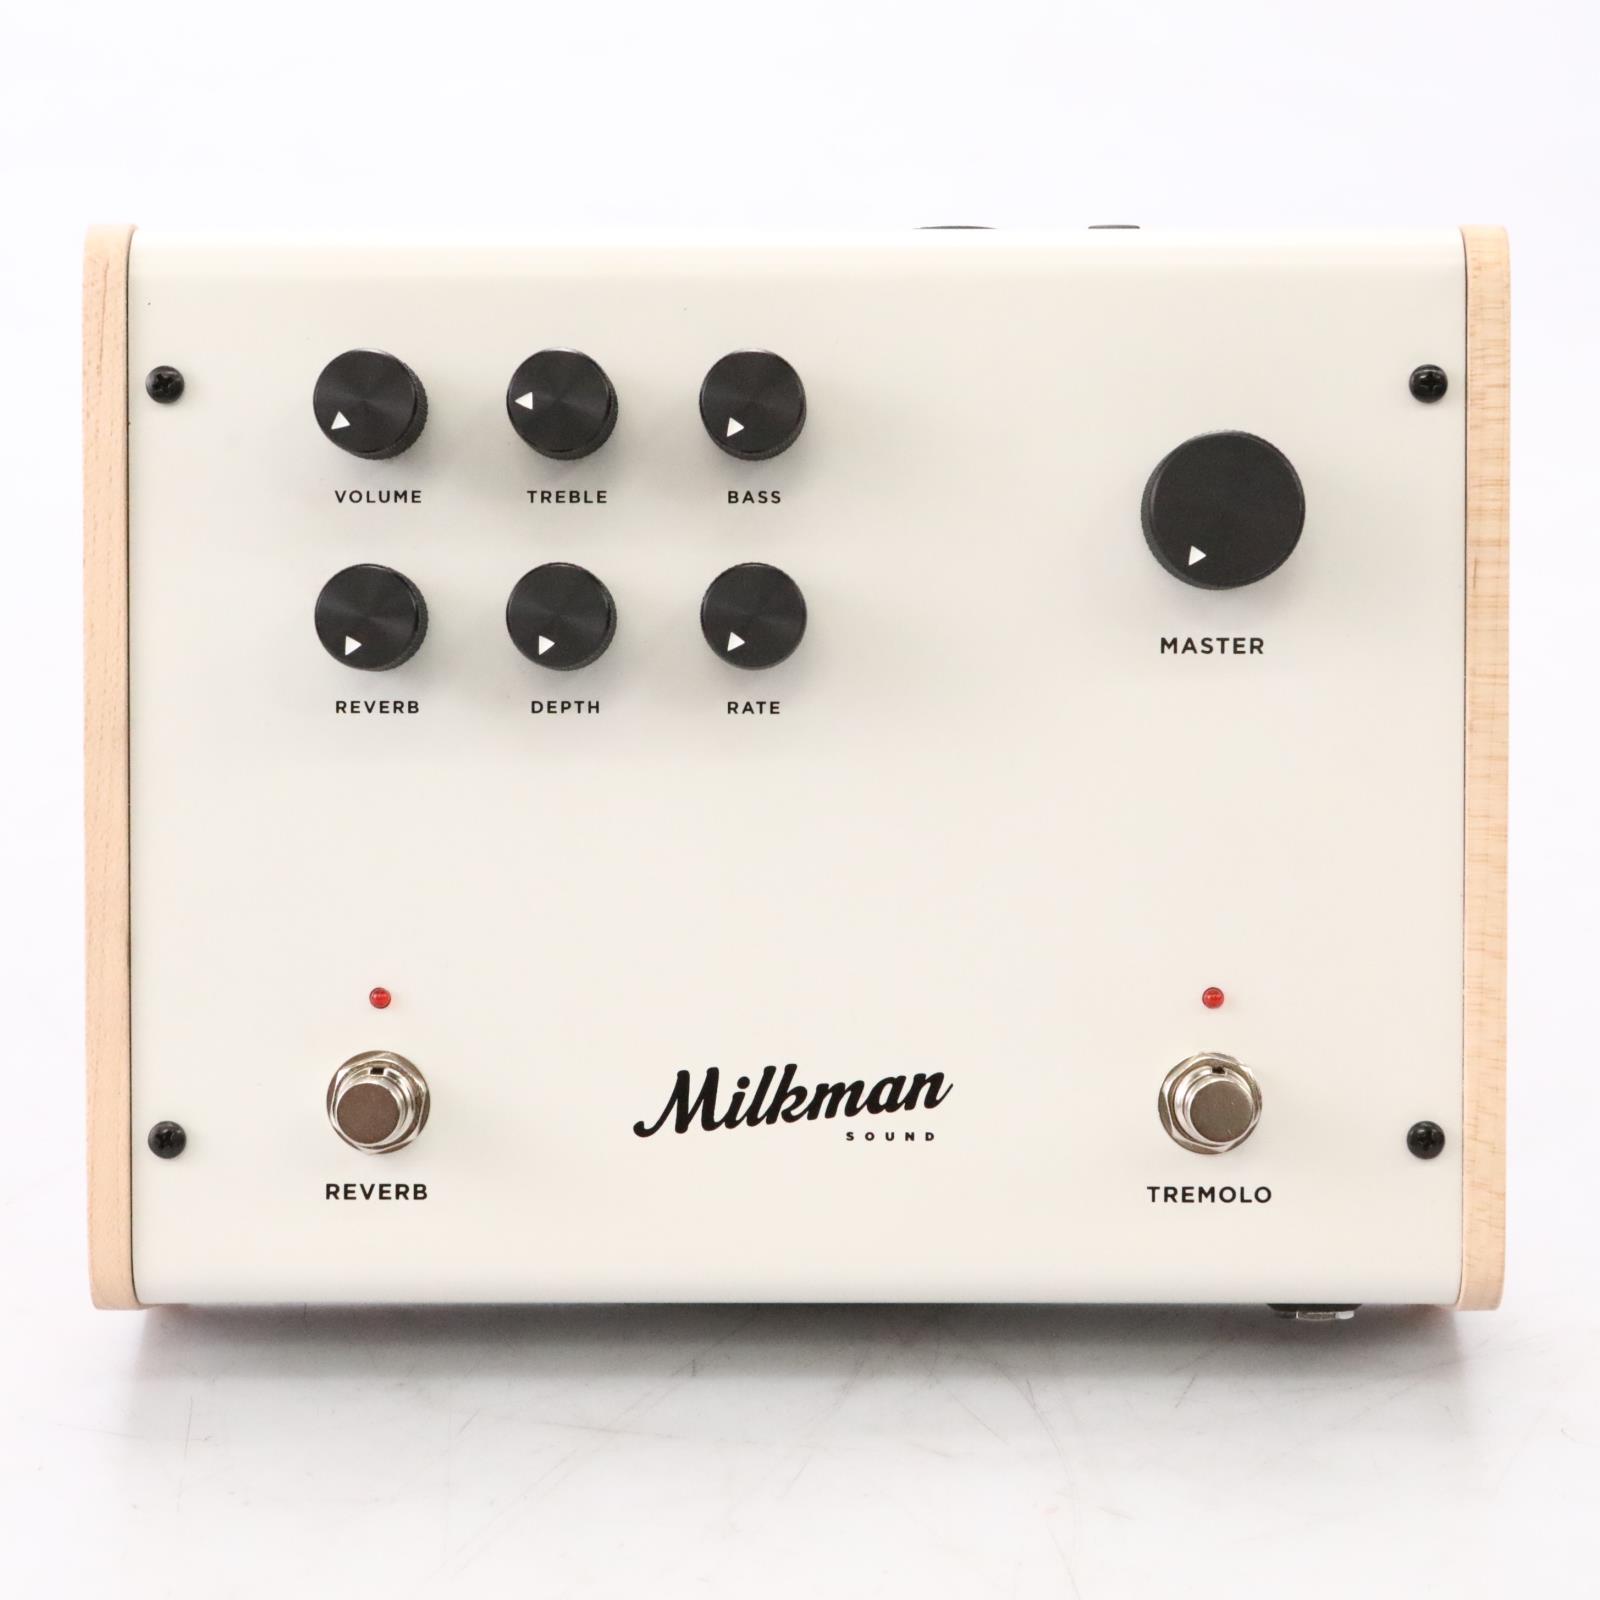 Milkman Sound The Amp 50-Watt Guitar Amplifier Preamp Effects Pedal #50421